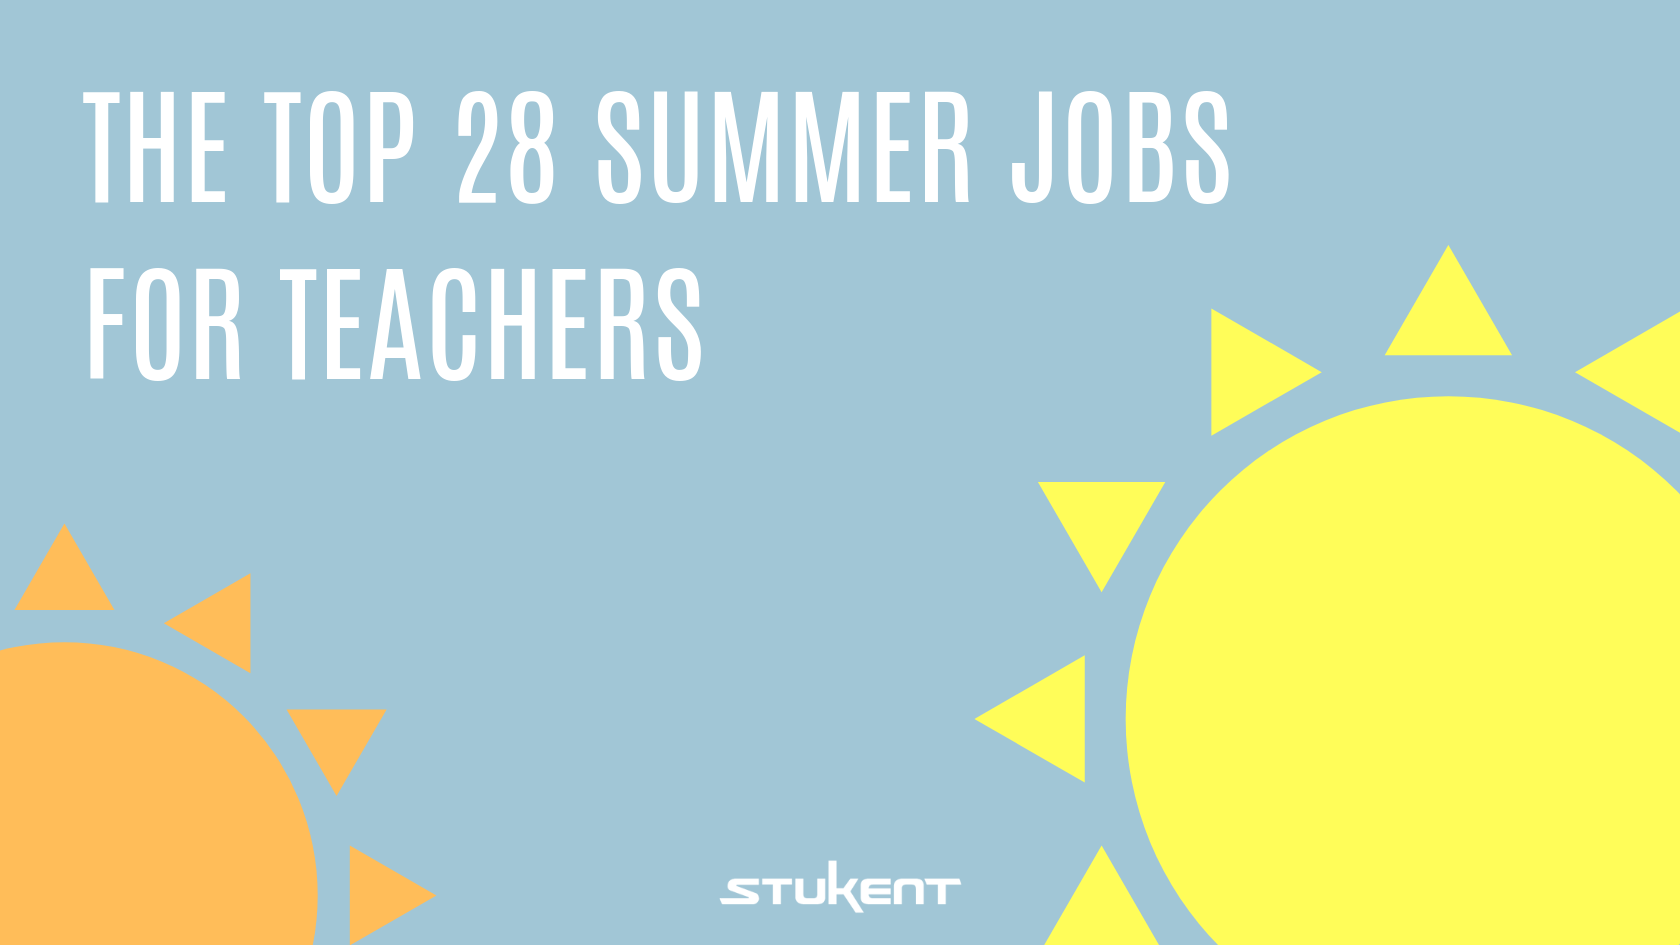 The Top 28 Summer Jobs for Teachers